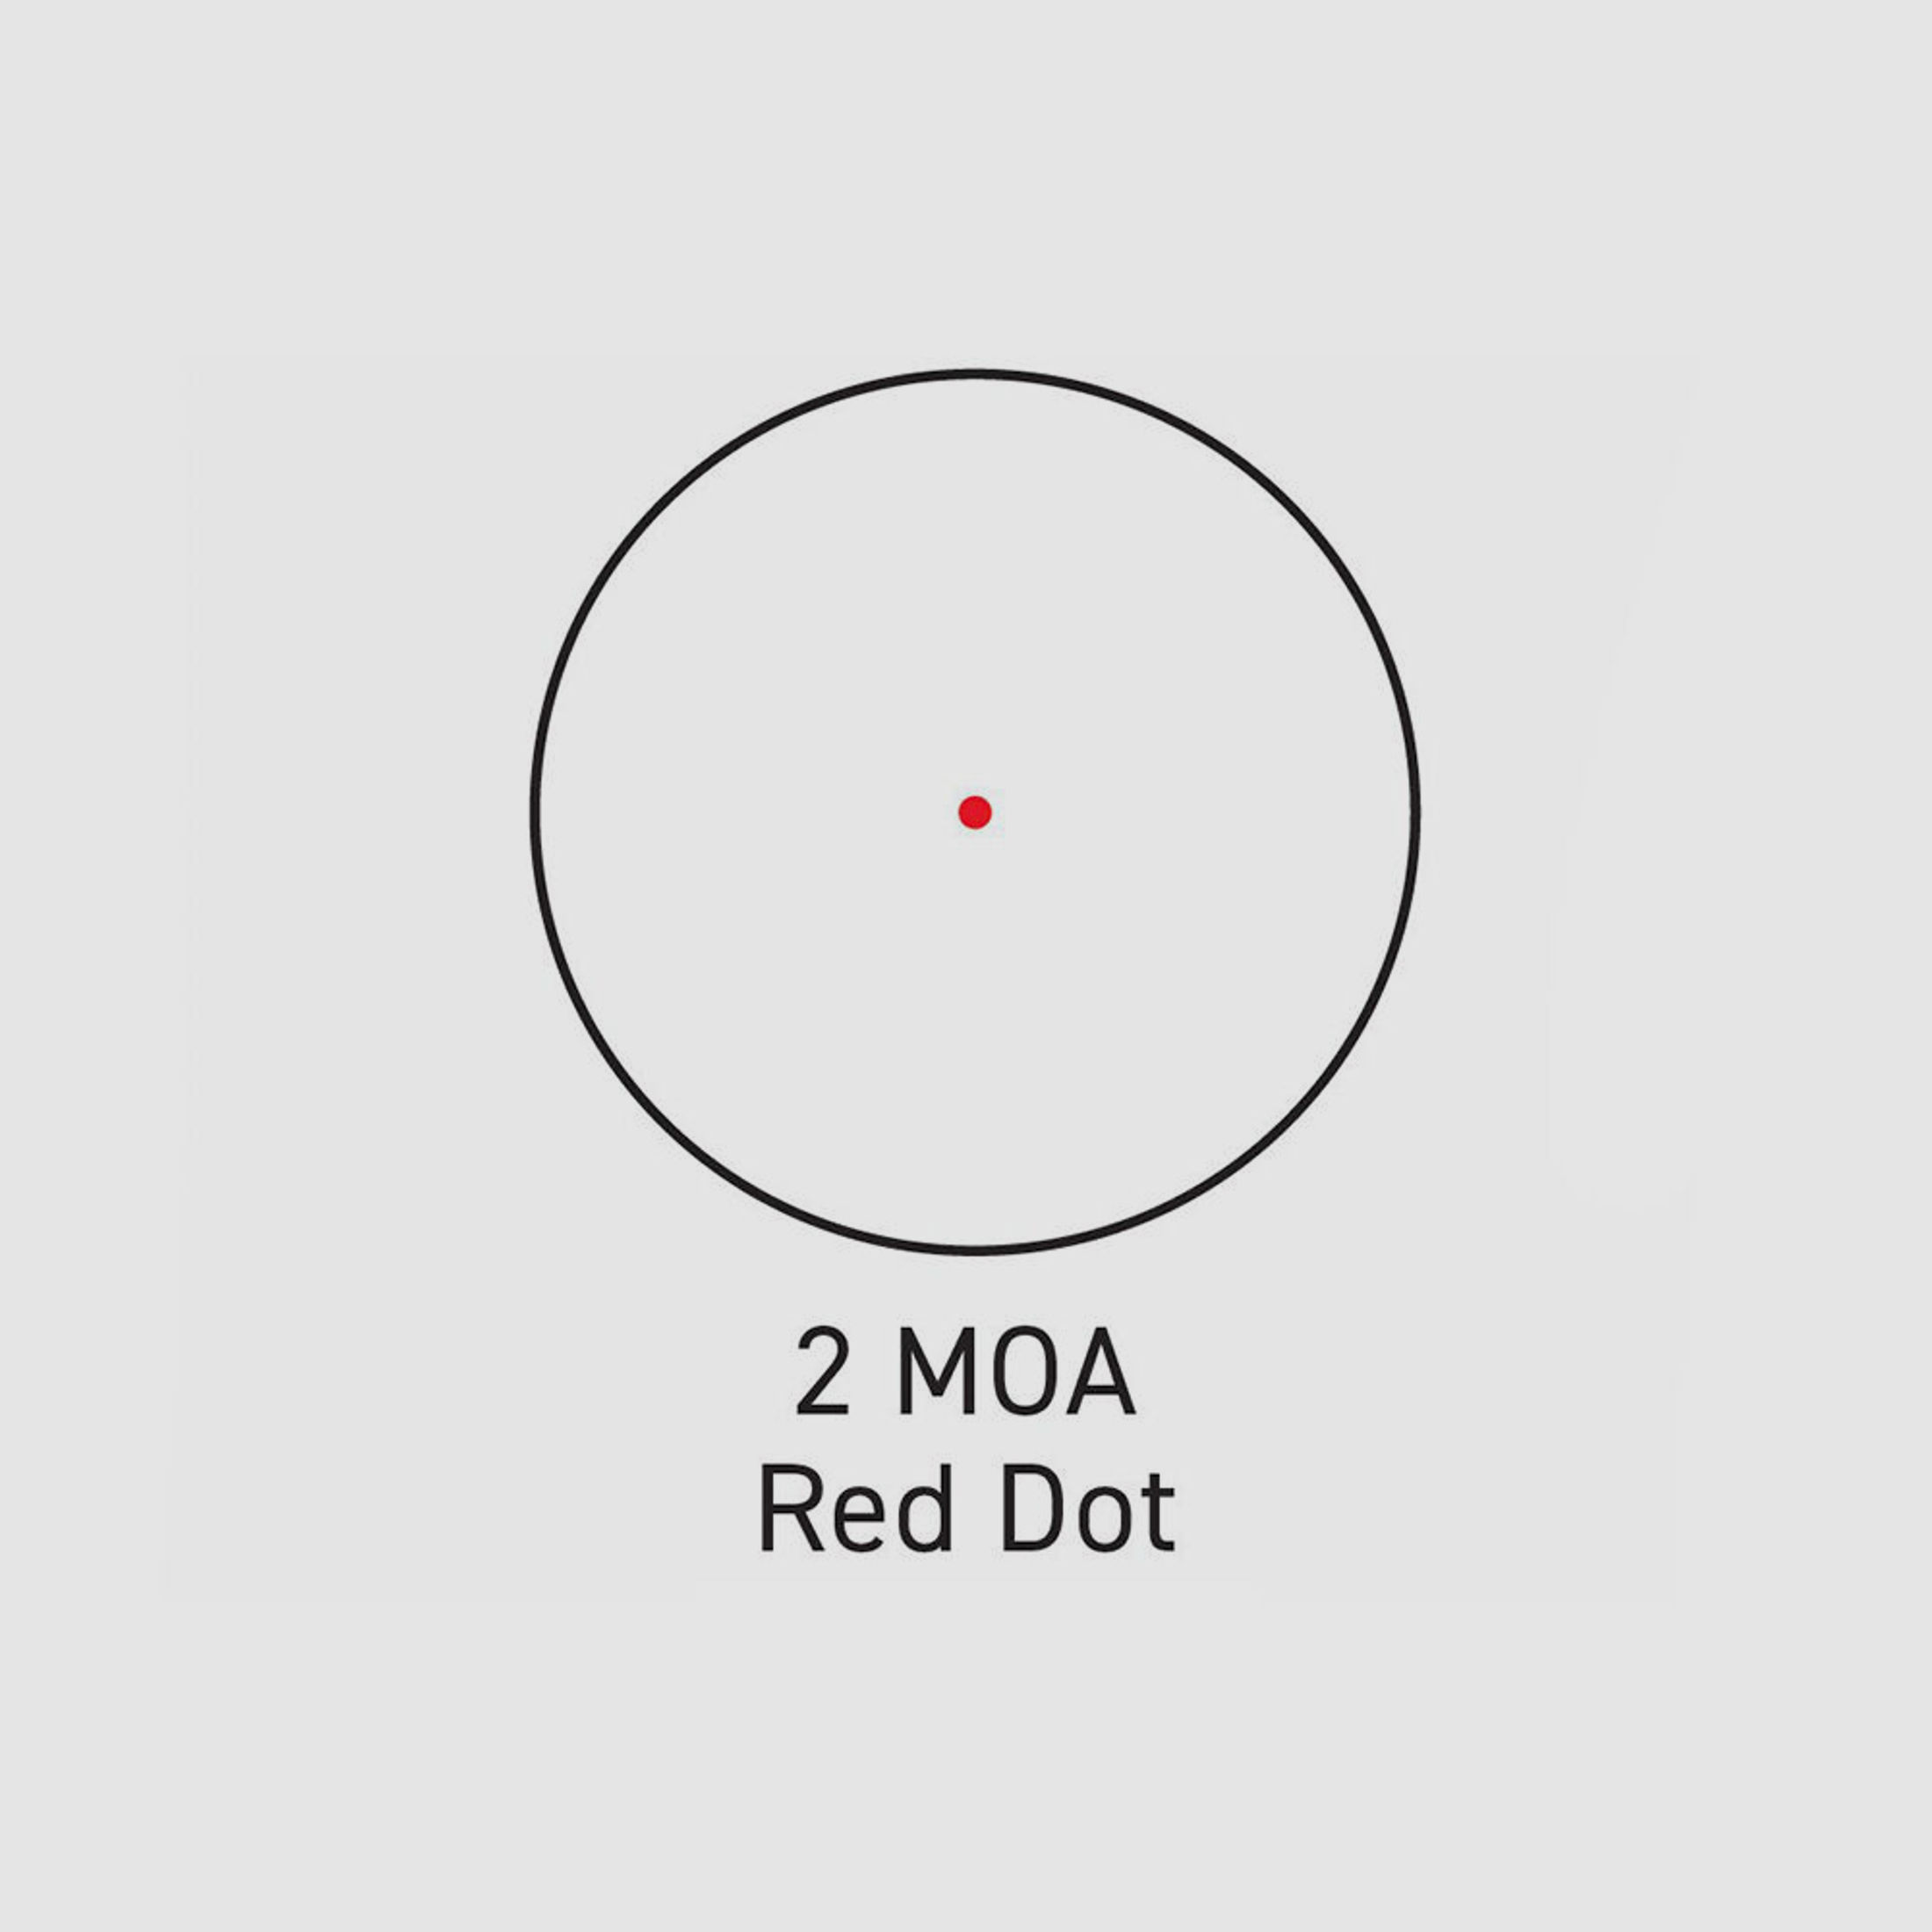 Sig Sauer Electro optics	 ROMEO5 Red Dot 1x20 2 MOA